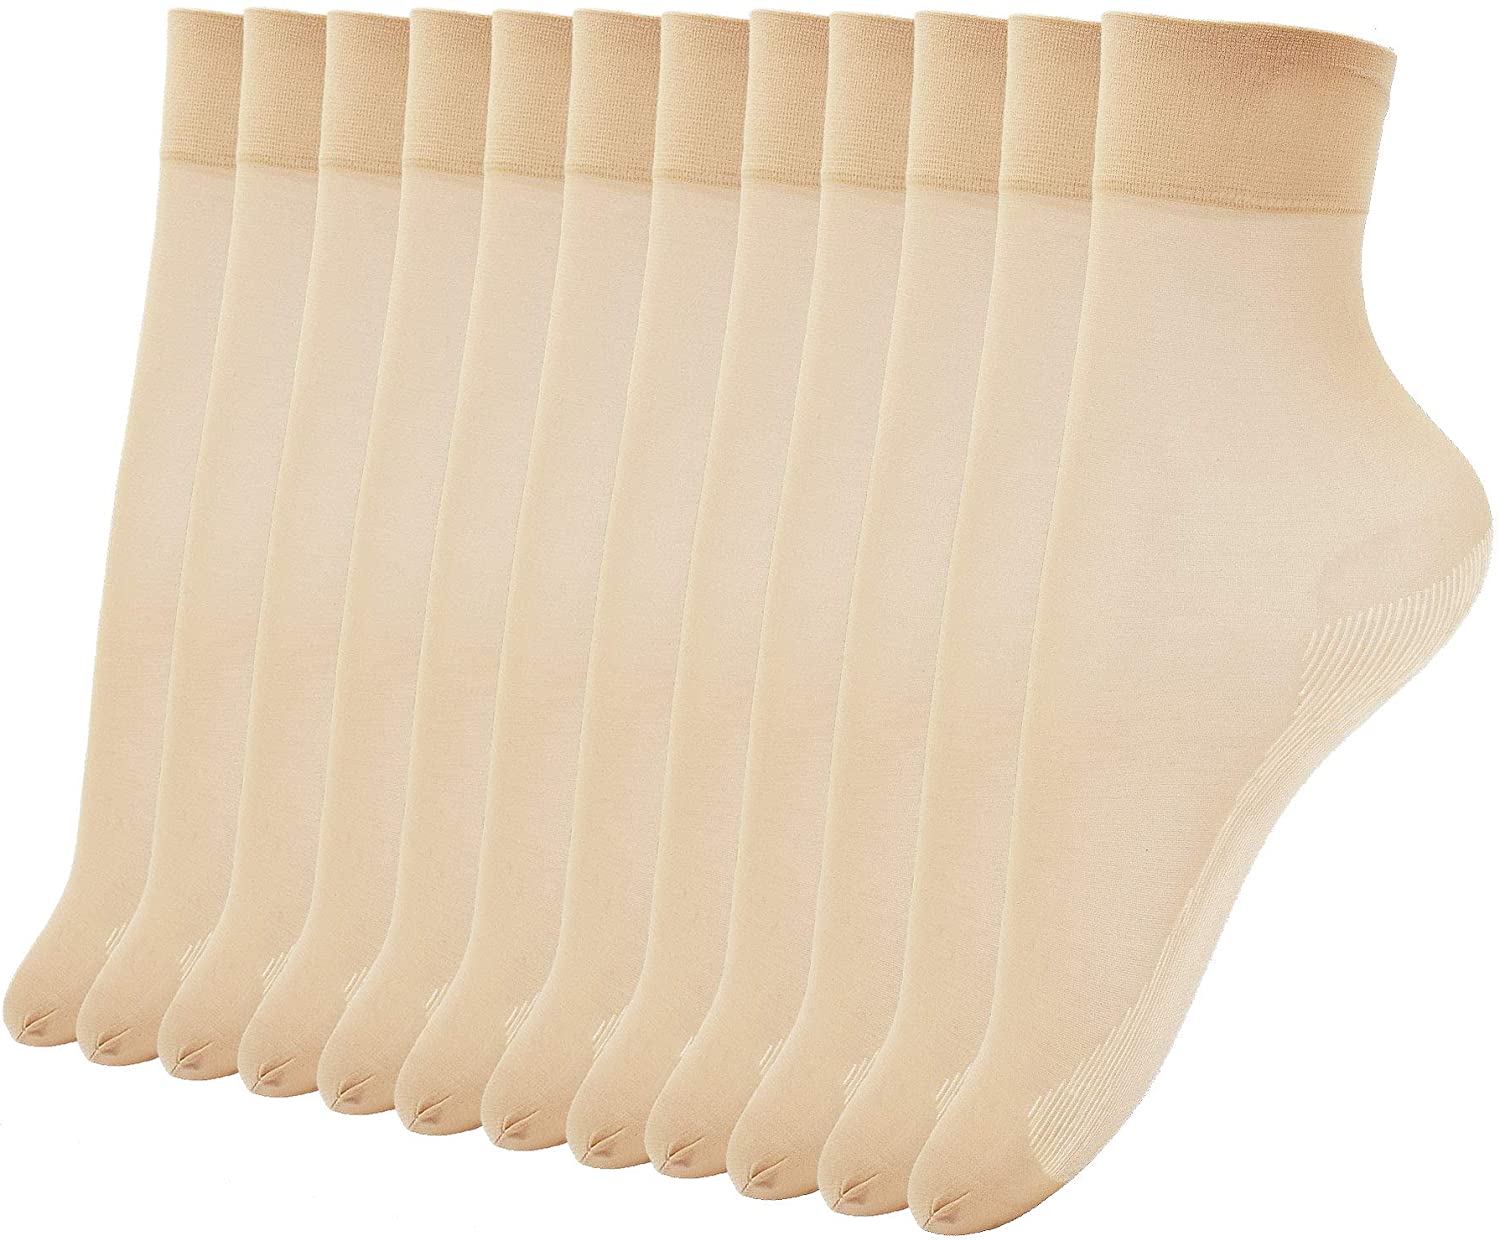 FITU Womens 12 Pairs Silky Cotton Sole Bottom Sheer Ankle High Nylon Tights  Hosiery Socks